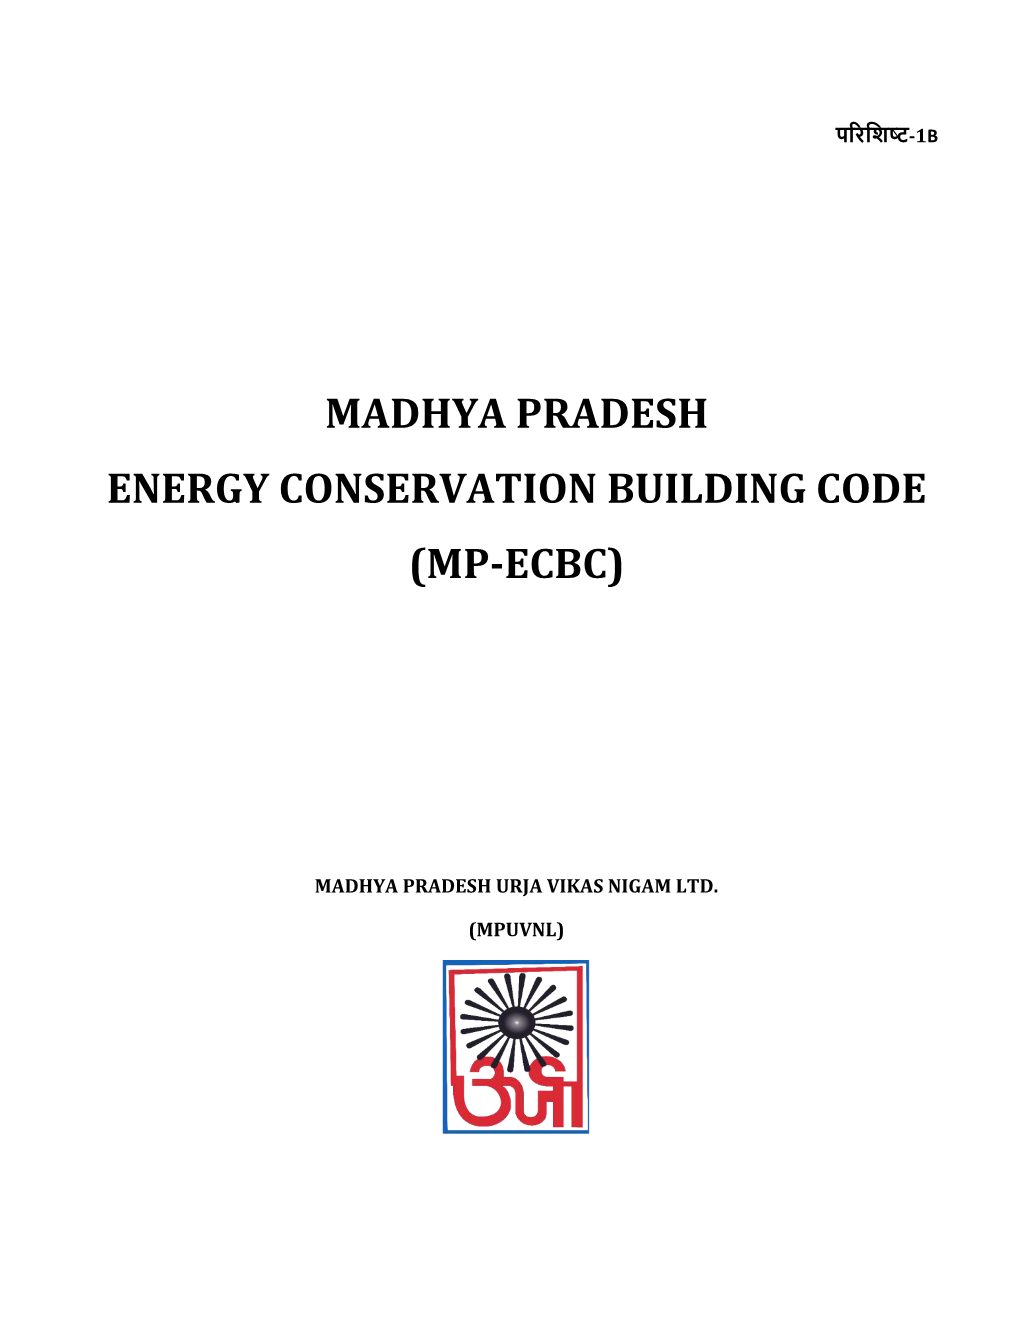 Madhya Pradesh Energy Conservation Building Code (Mp-Ecbc)